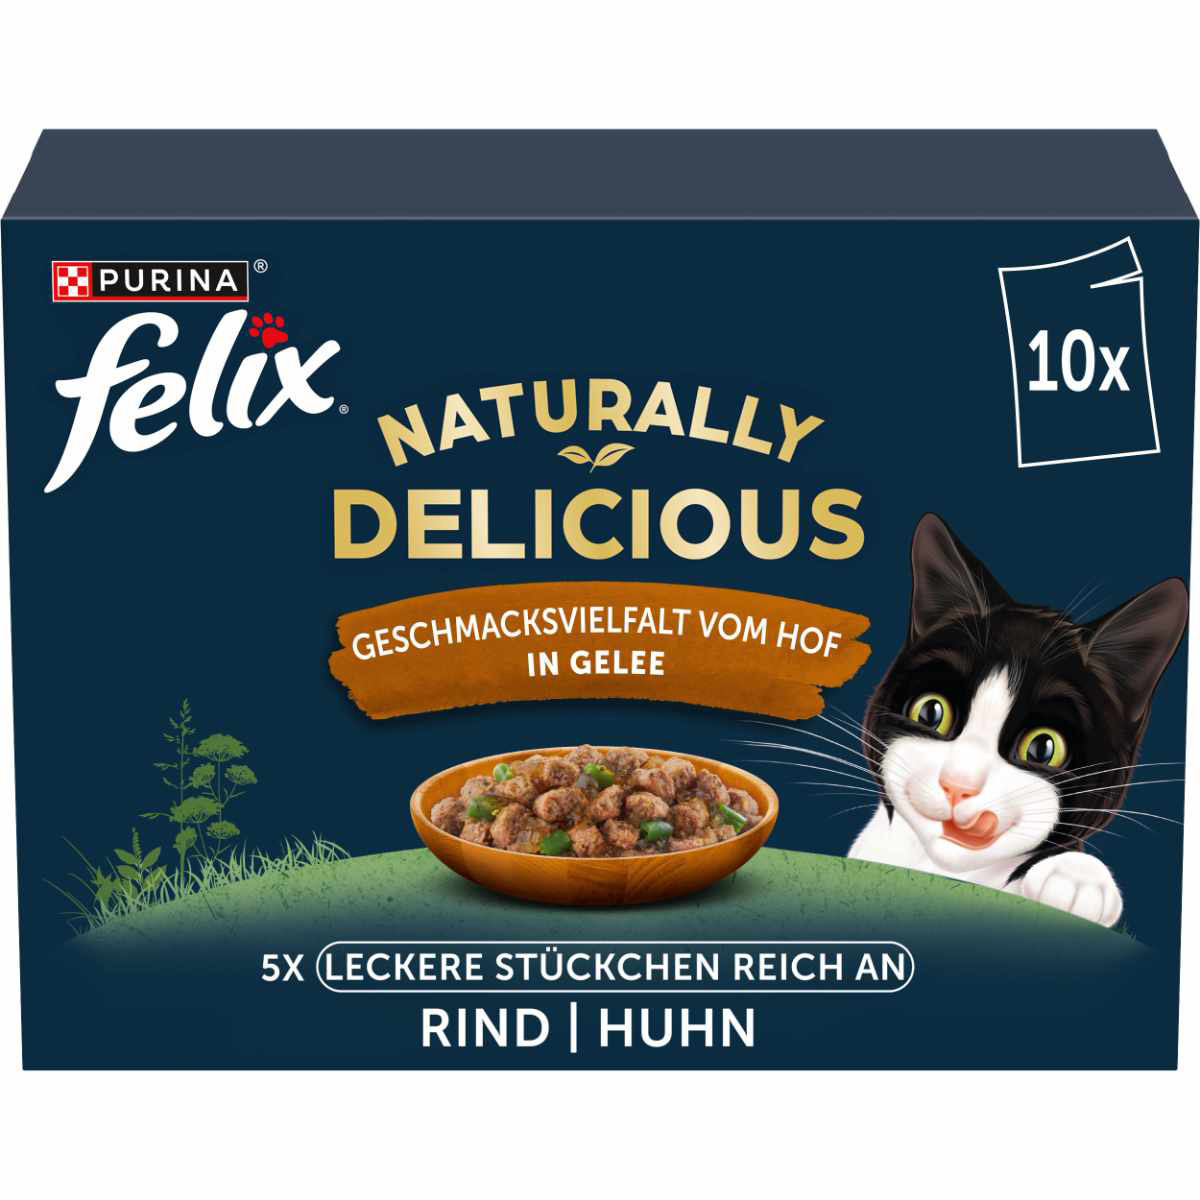 FELIX Naturally Delicious Vielfalt vom Hof